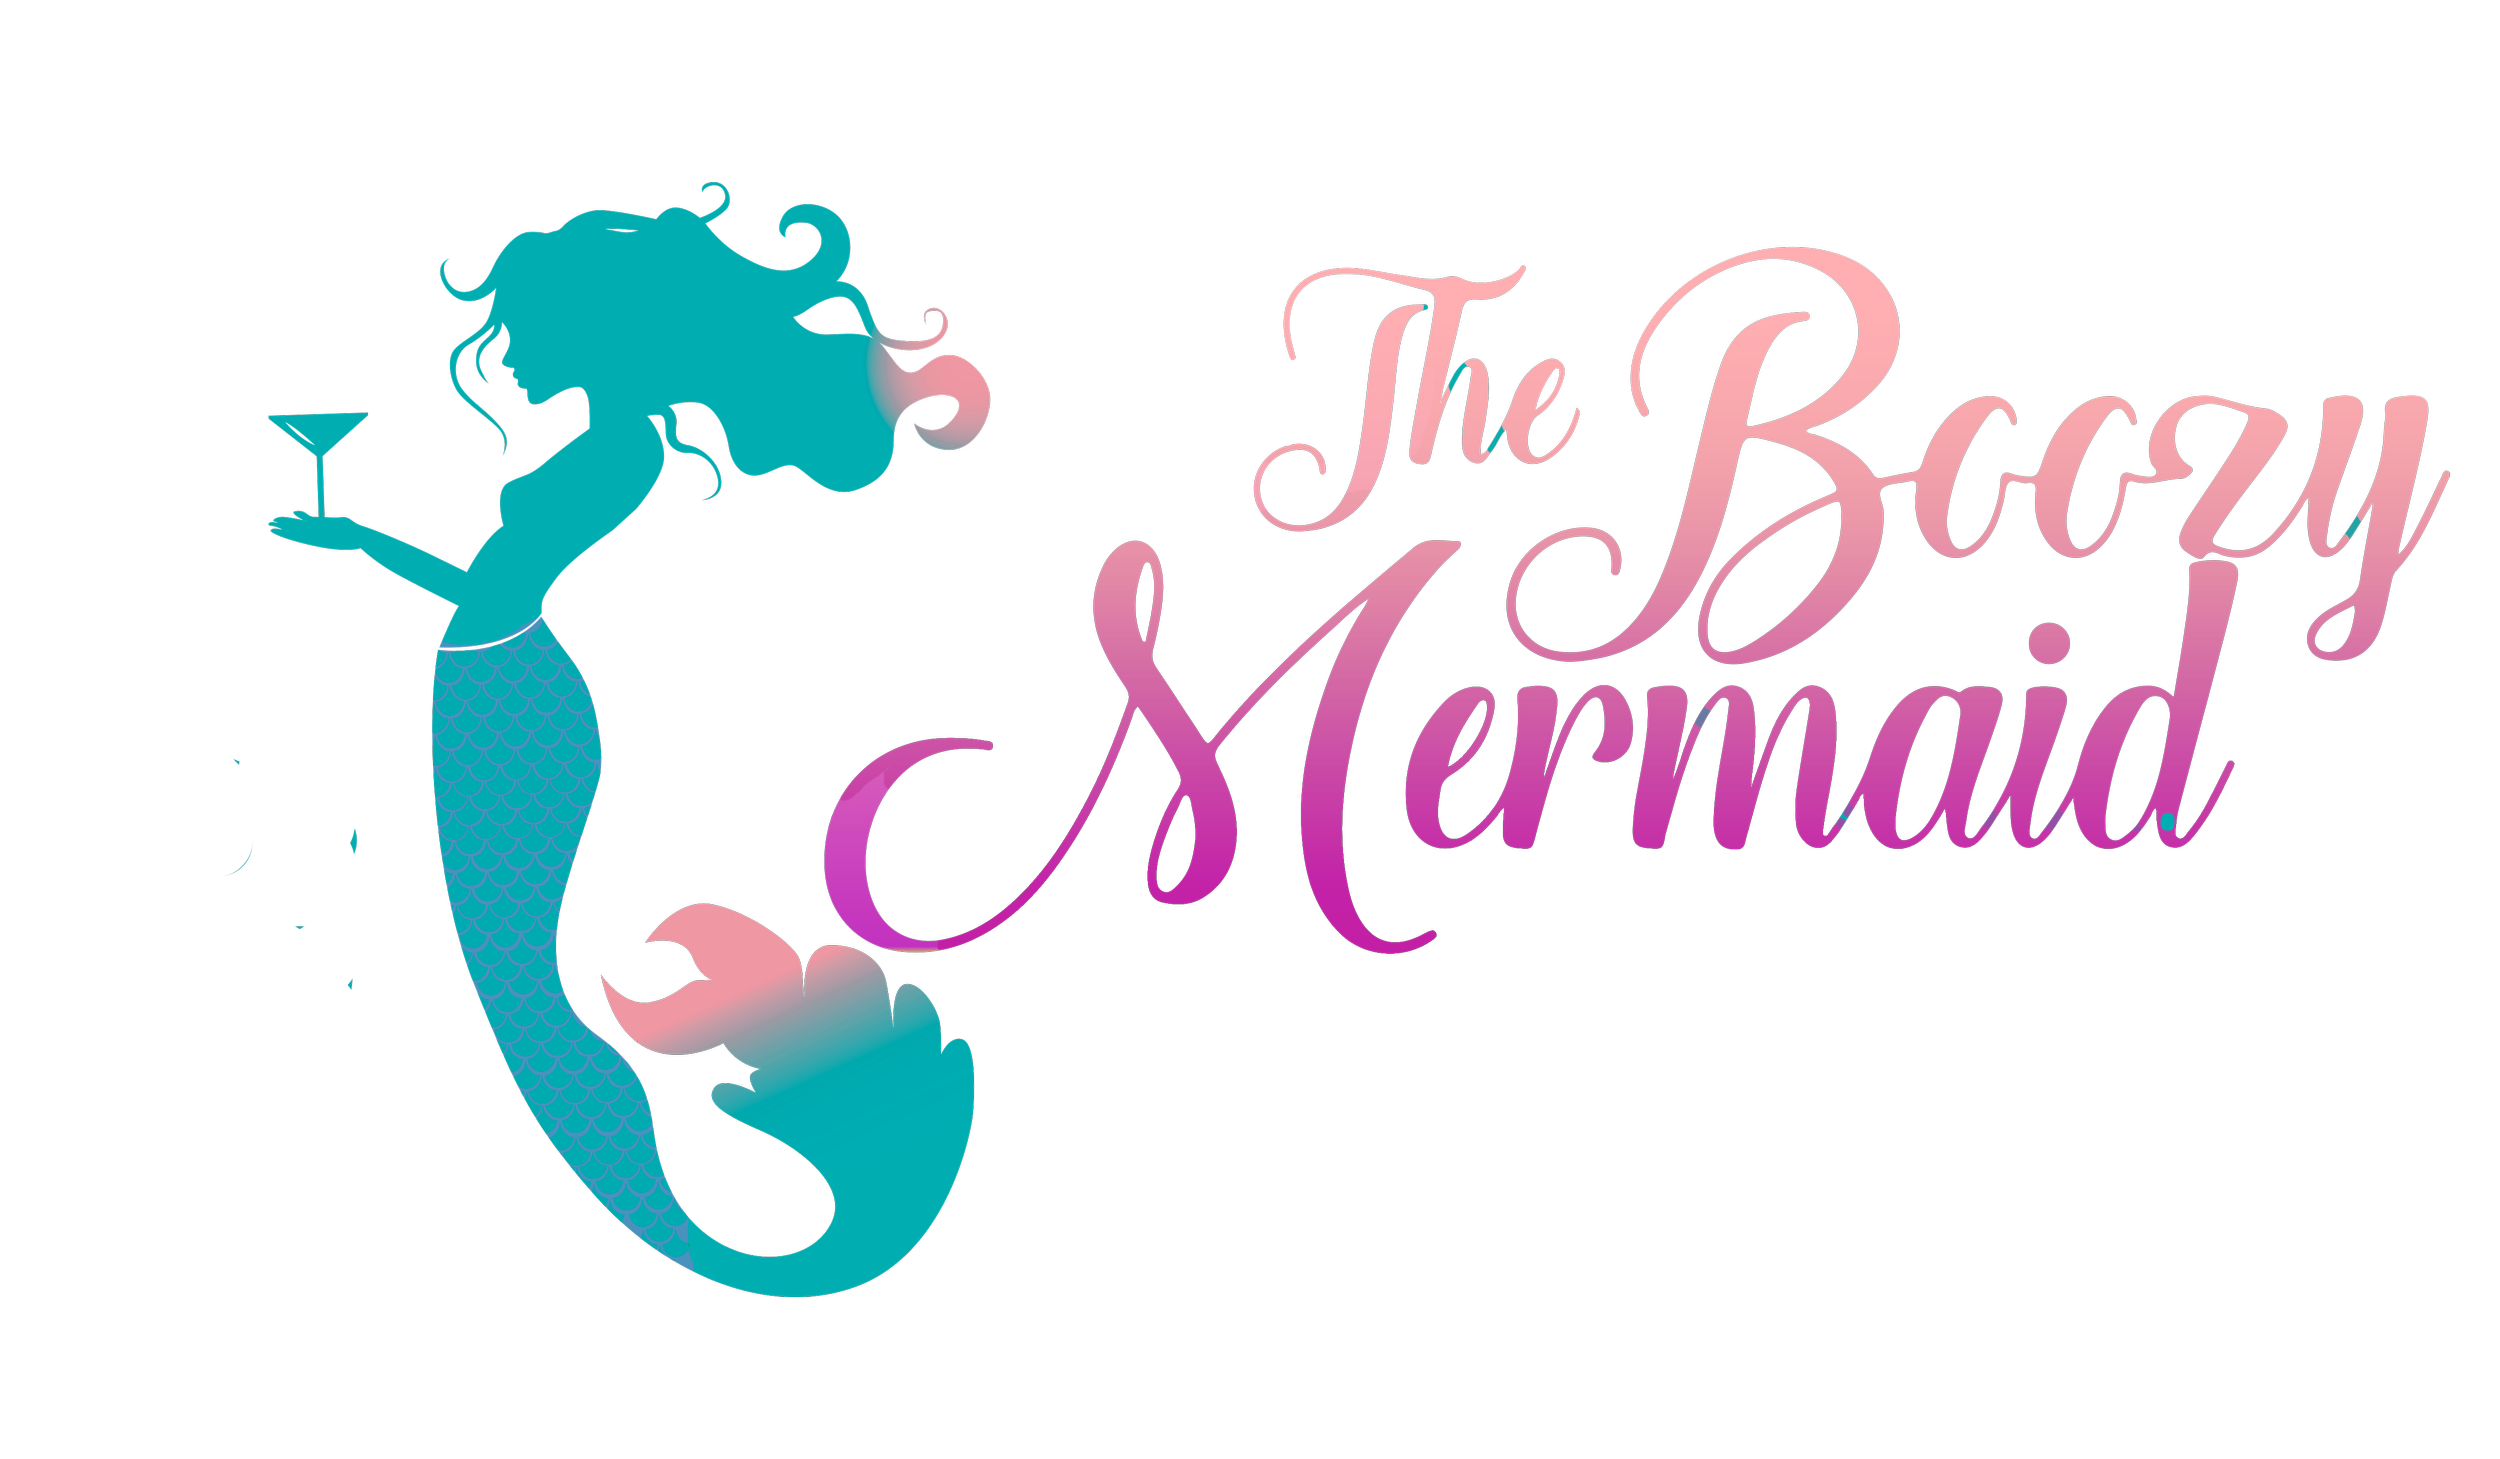 MERMAID STRAW - Mermaid Straw LLC Trademark Registration